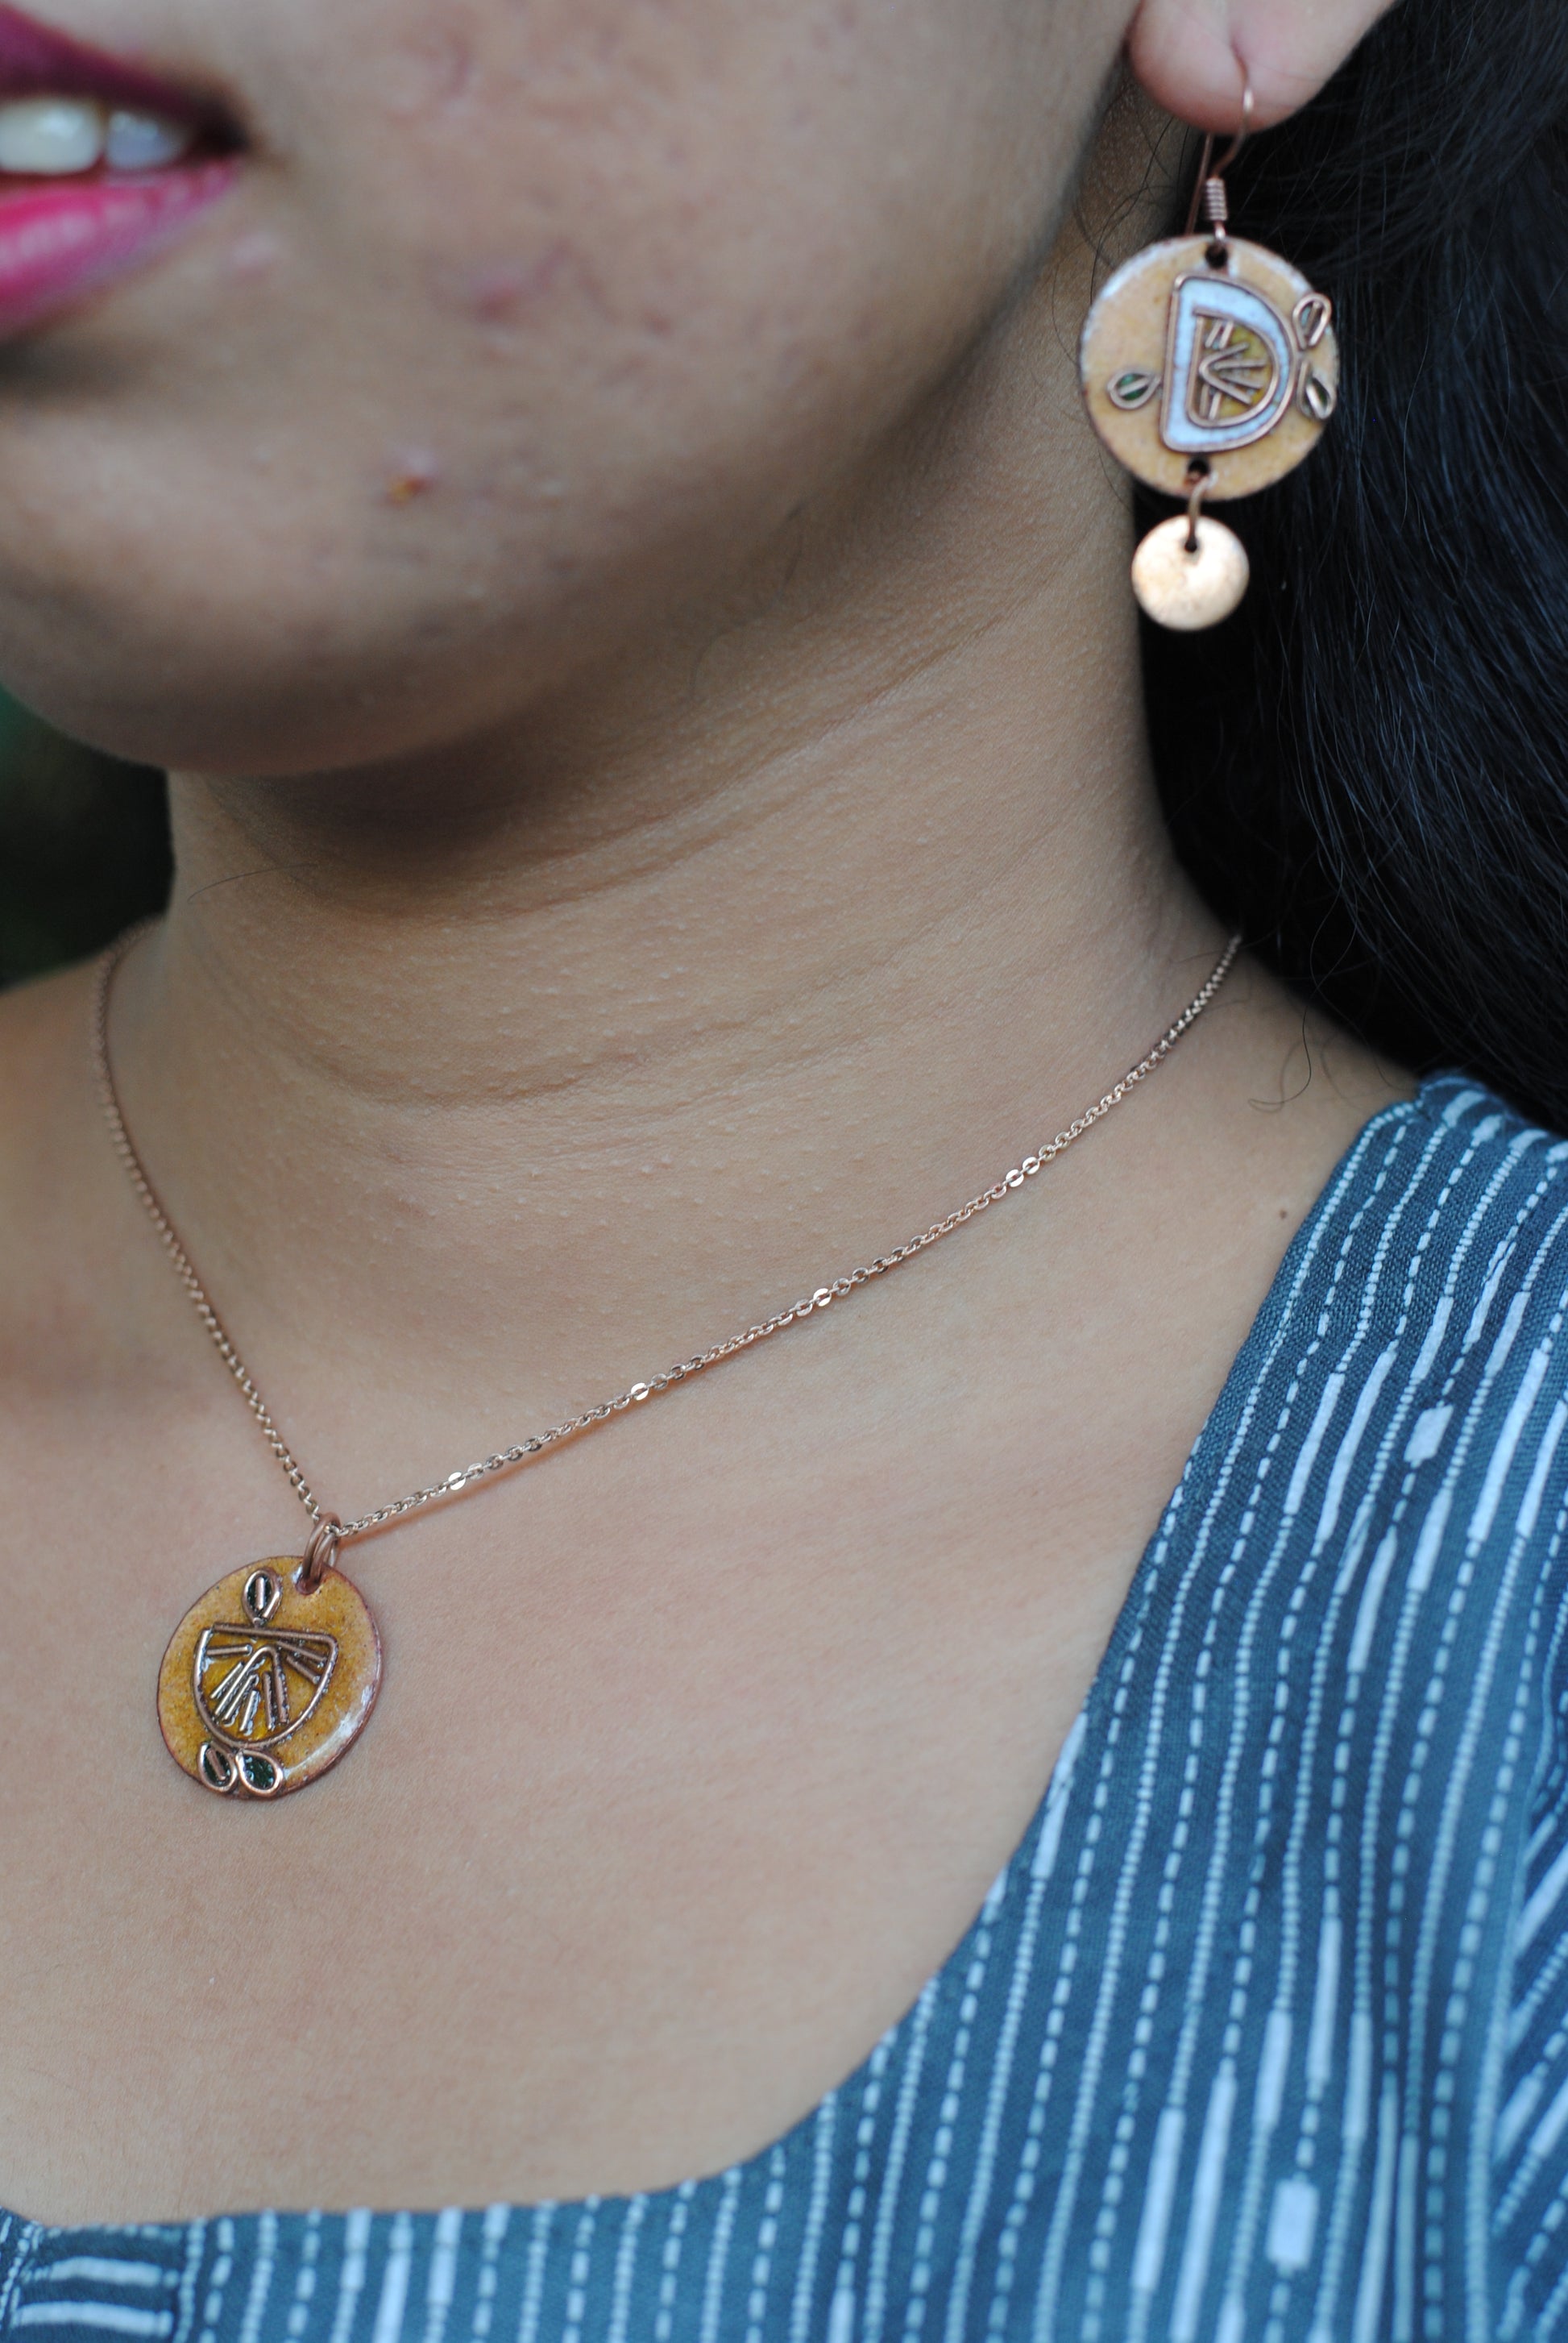 Copper enamel jewelry, funky earrings handcrafted in Maharashtra, India. Lemon nimbuzz theme